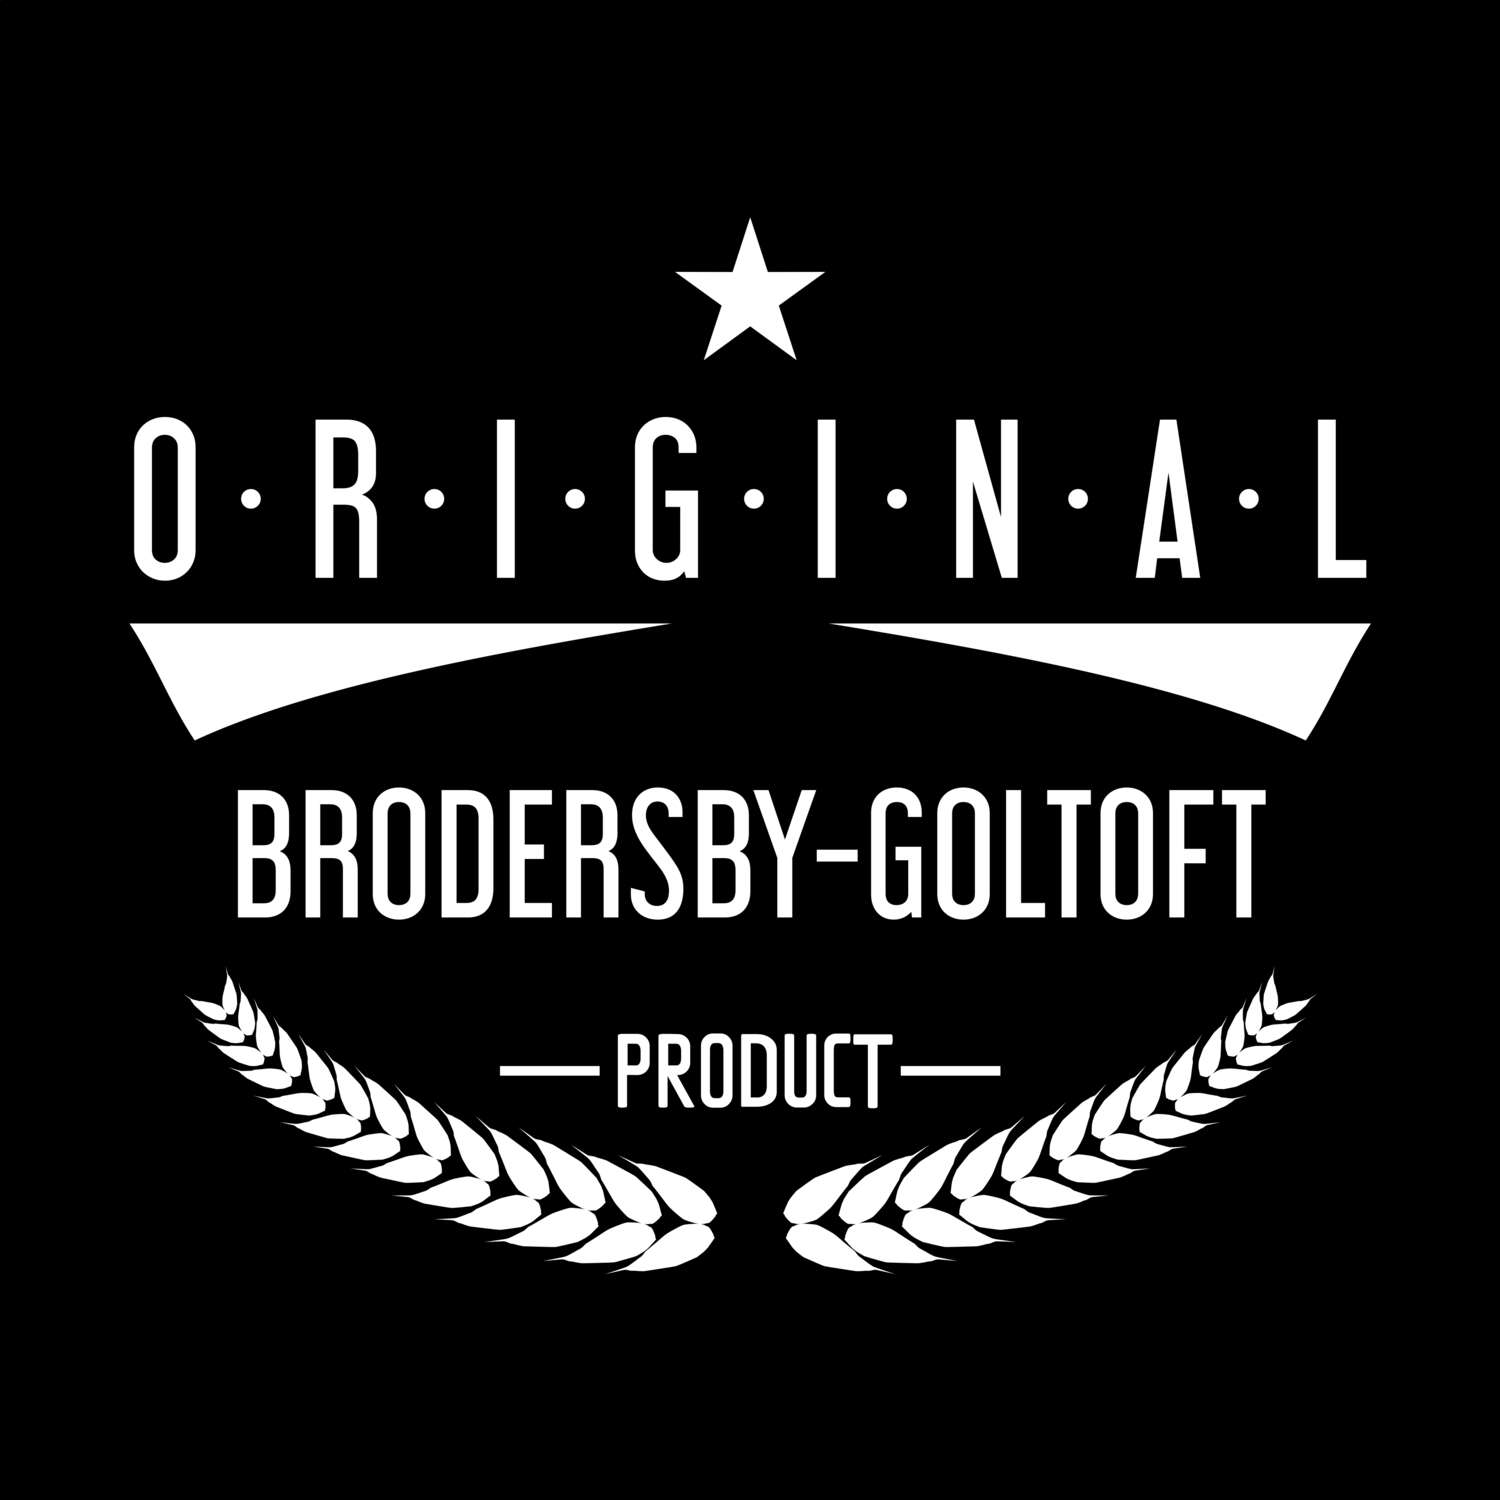 Brodersby-Goltoft T-Shirt »Original Product«